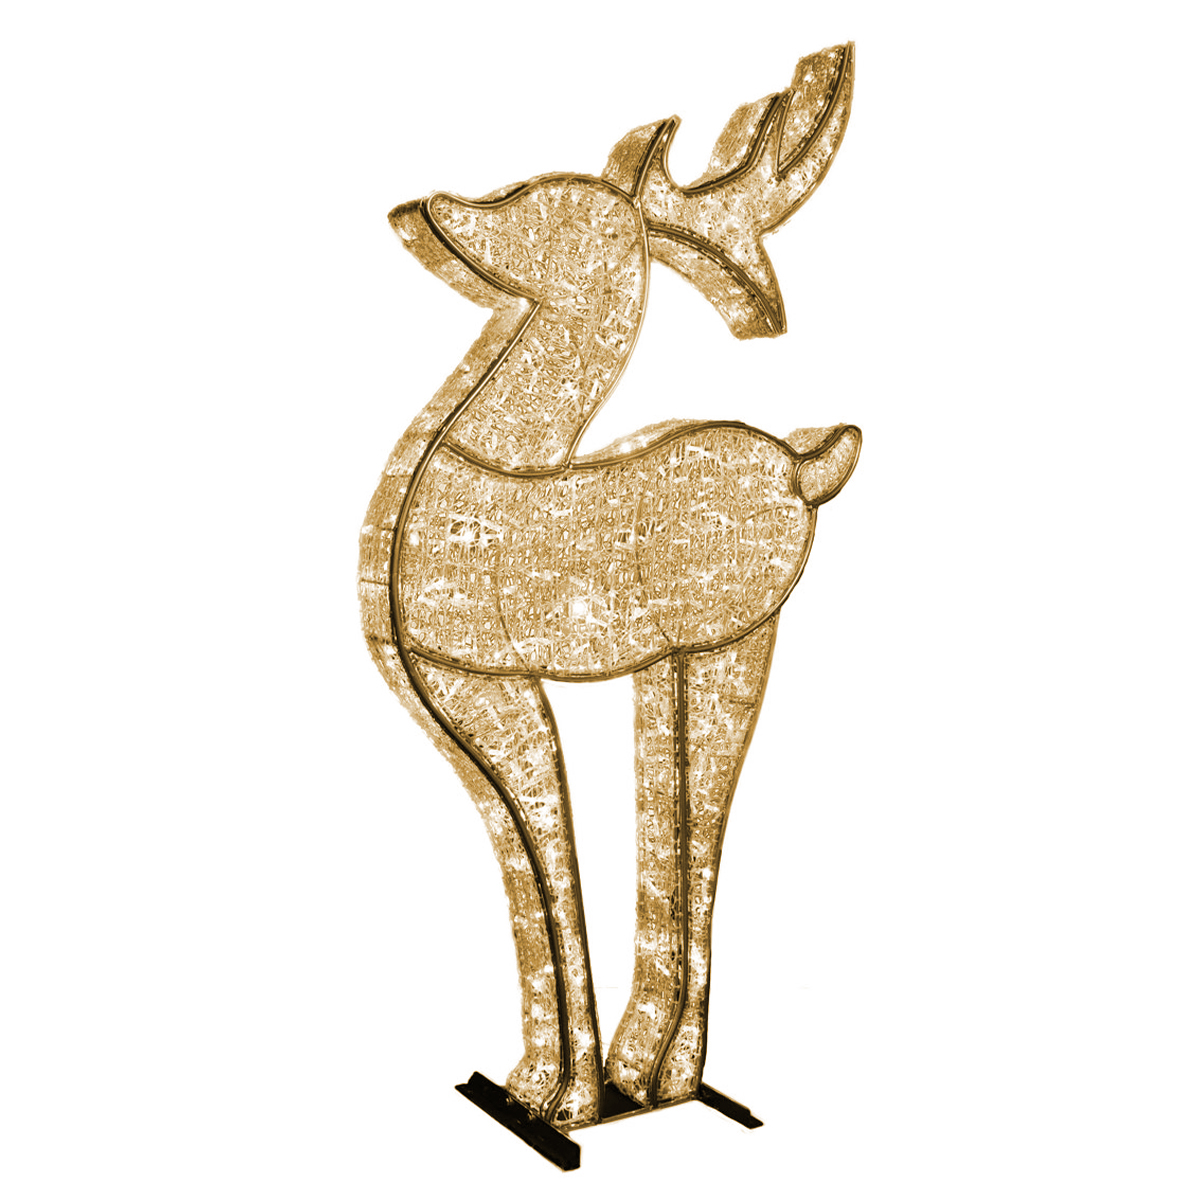 3D Christmas Deer Display - Cool White LED-lit - Medium - Gold - 7ft tall